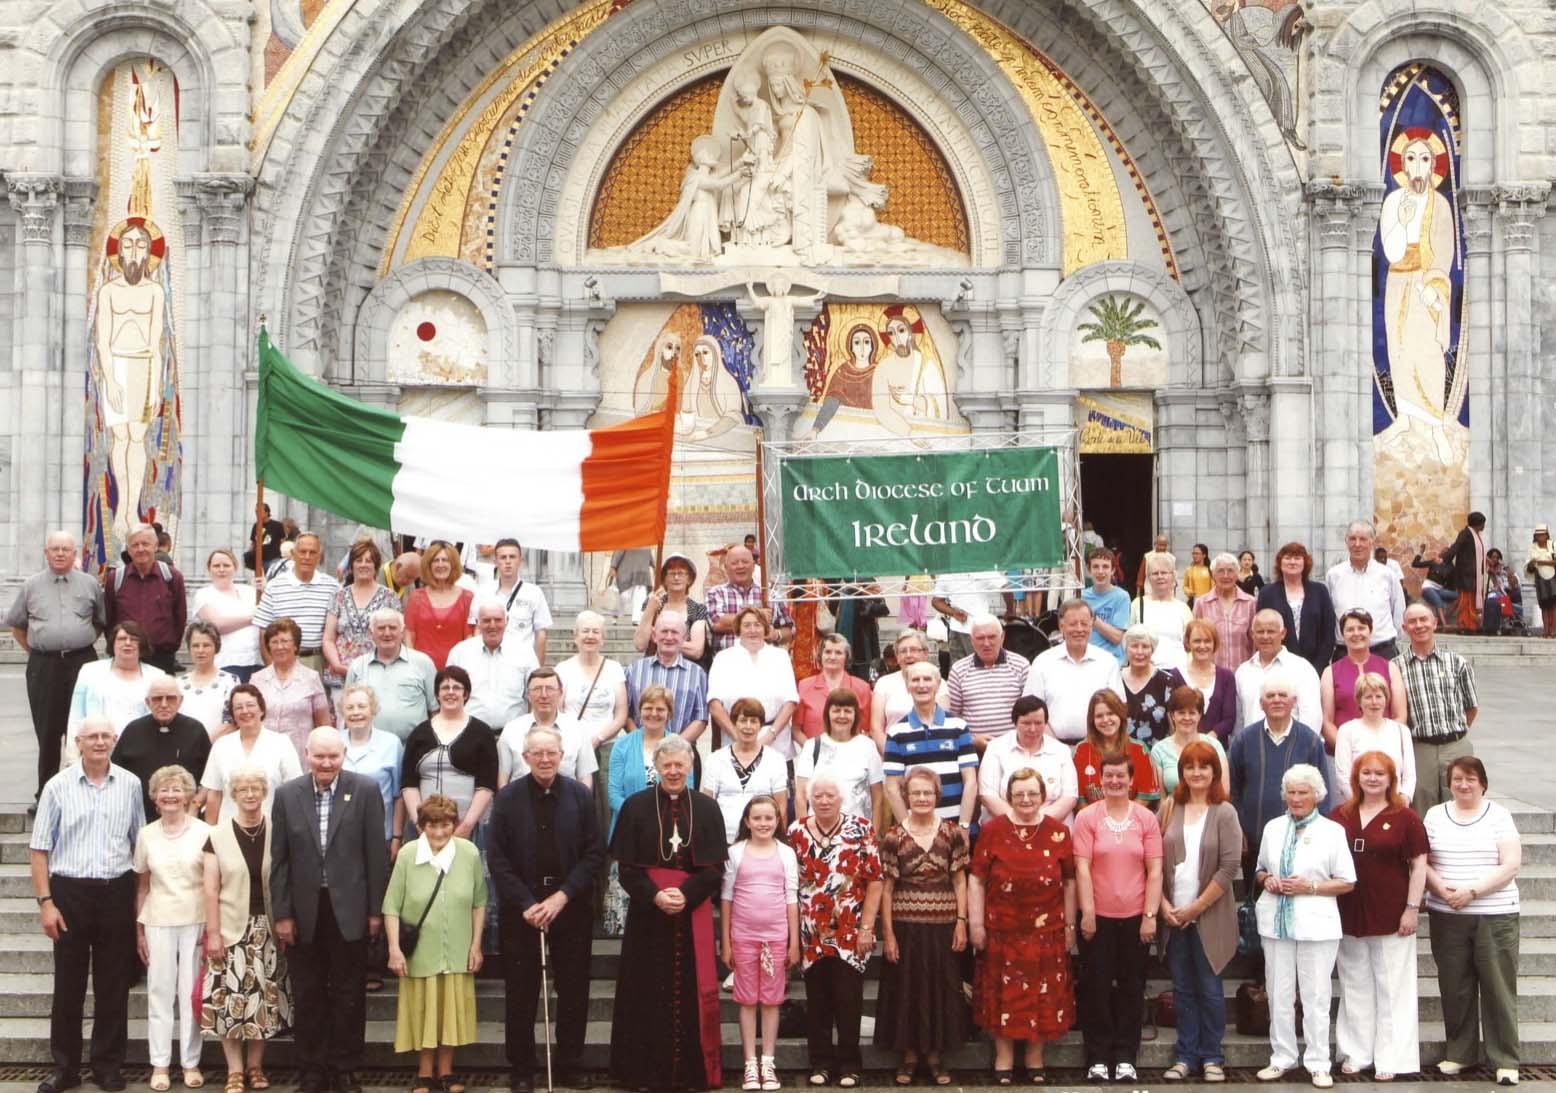 Diocesan Pilgrimage to Lourdes